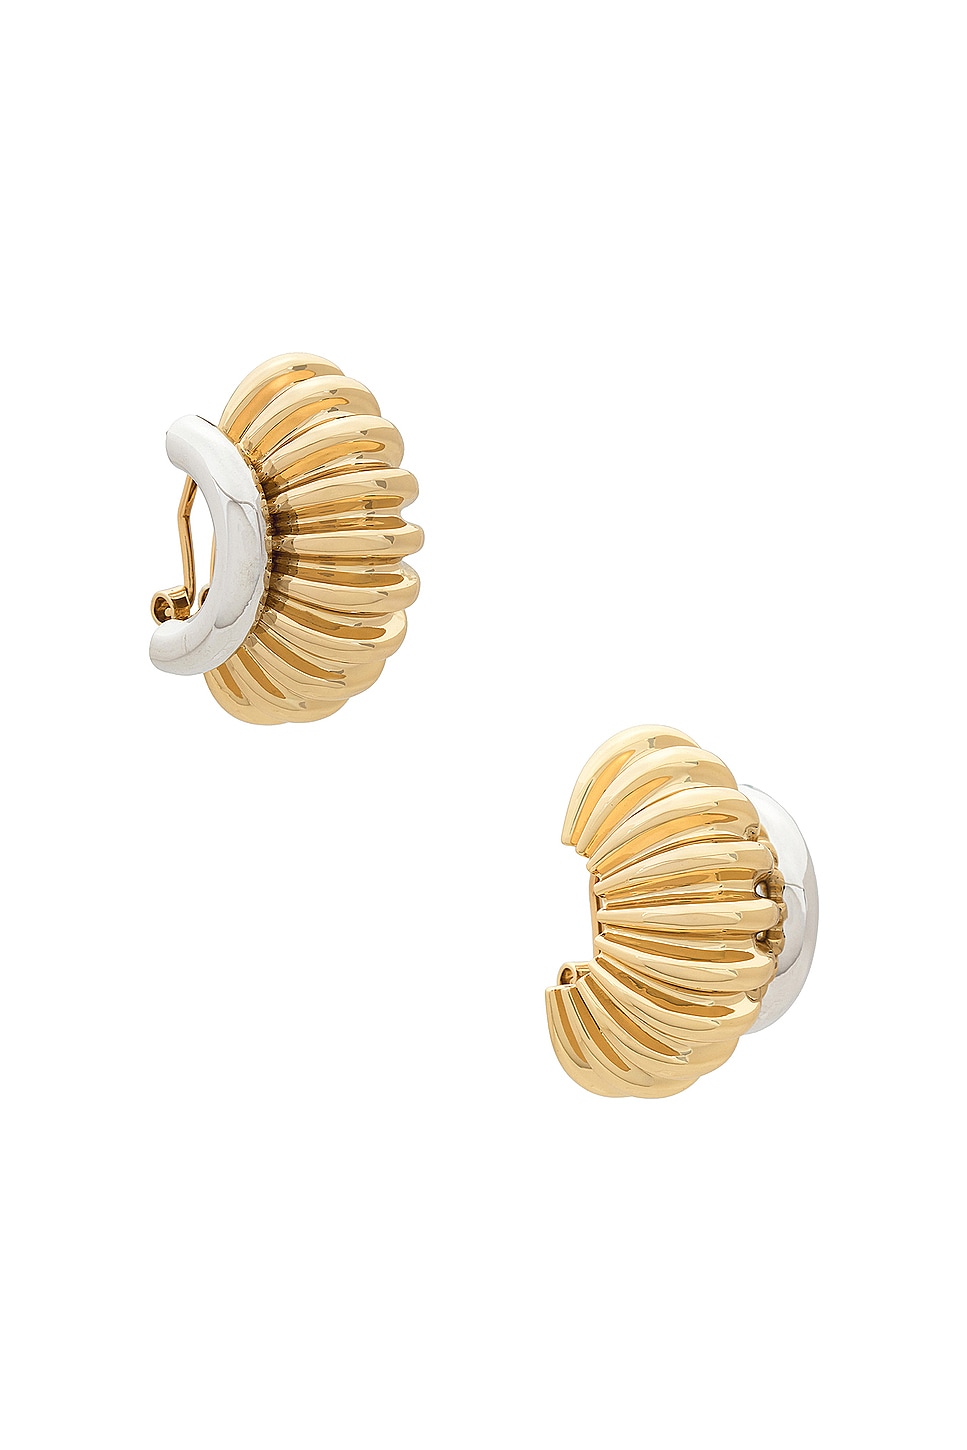 Lexi Earrings in Metallic Gold